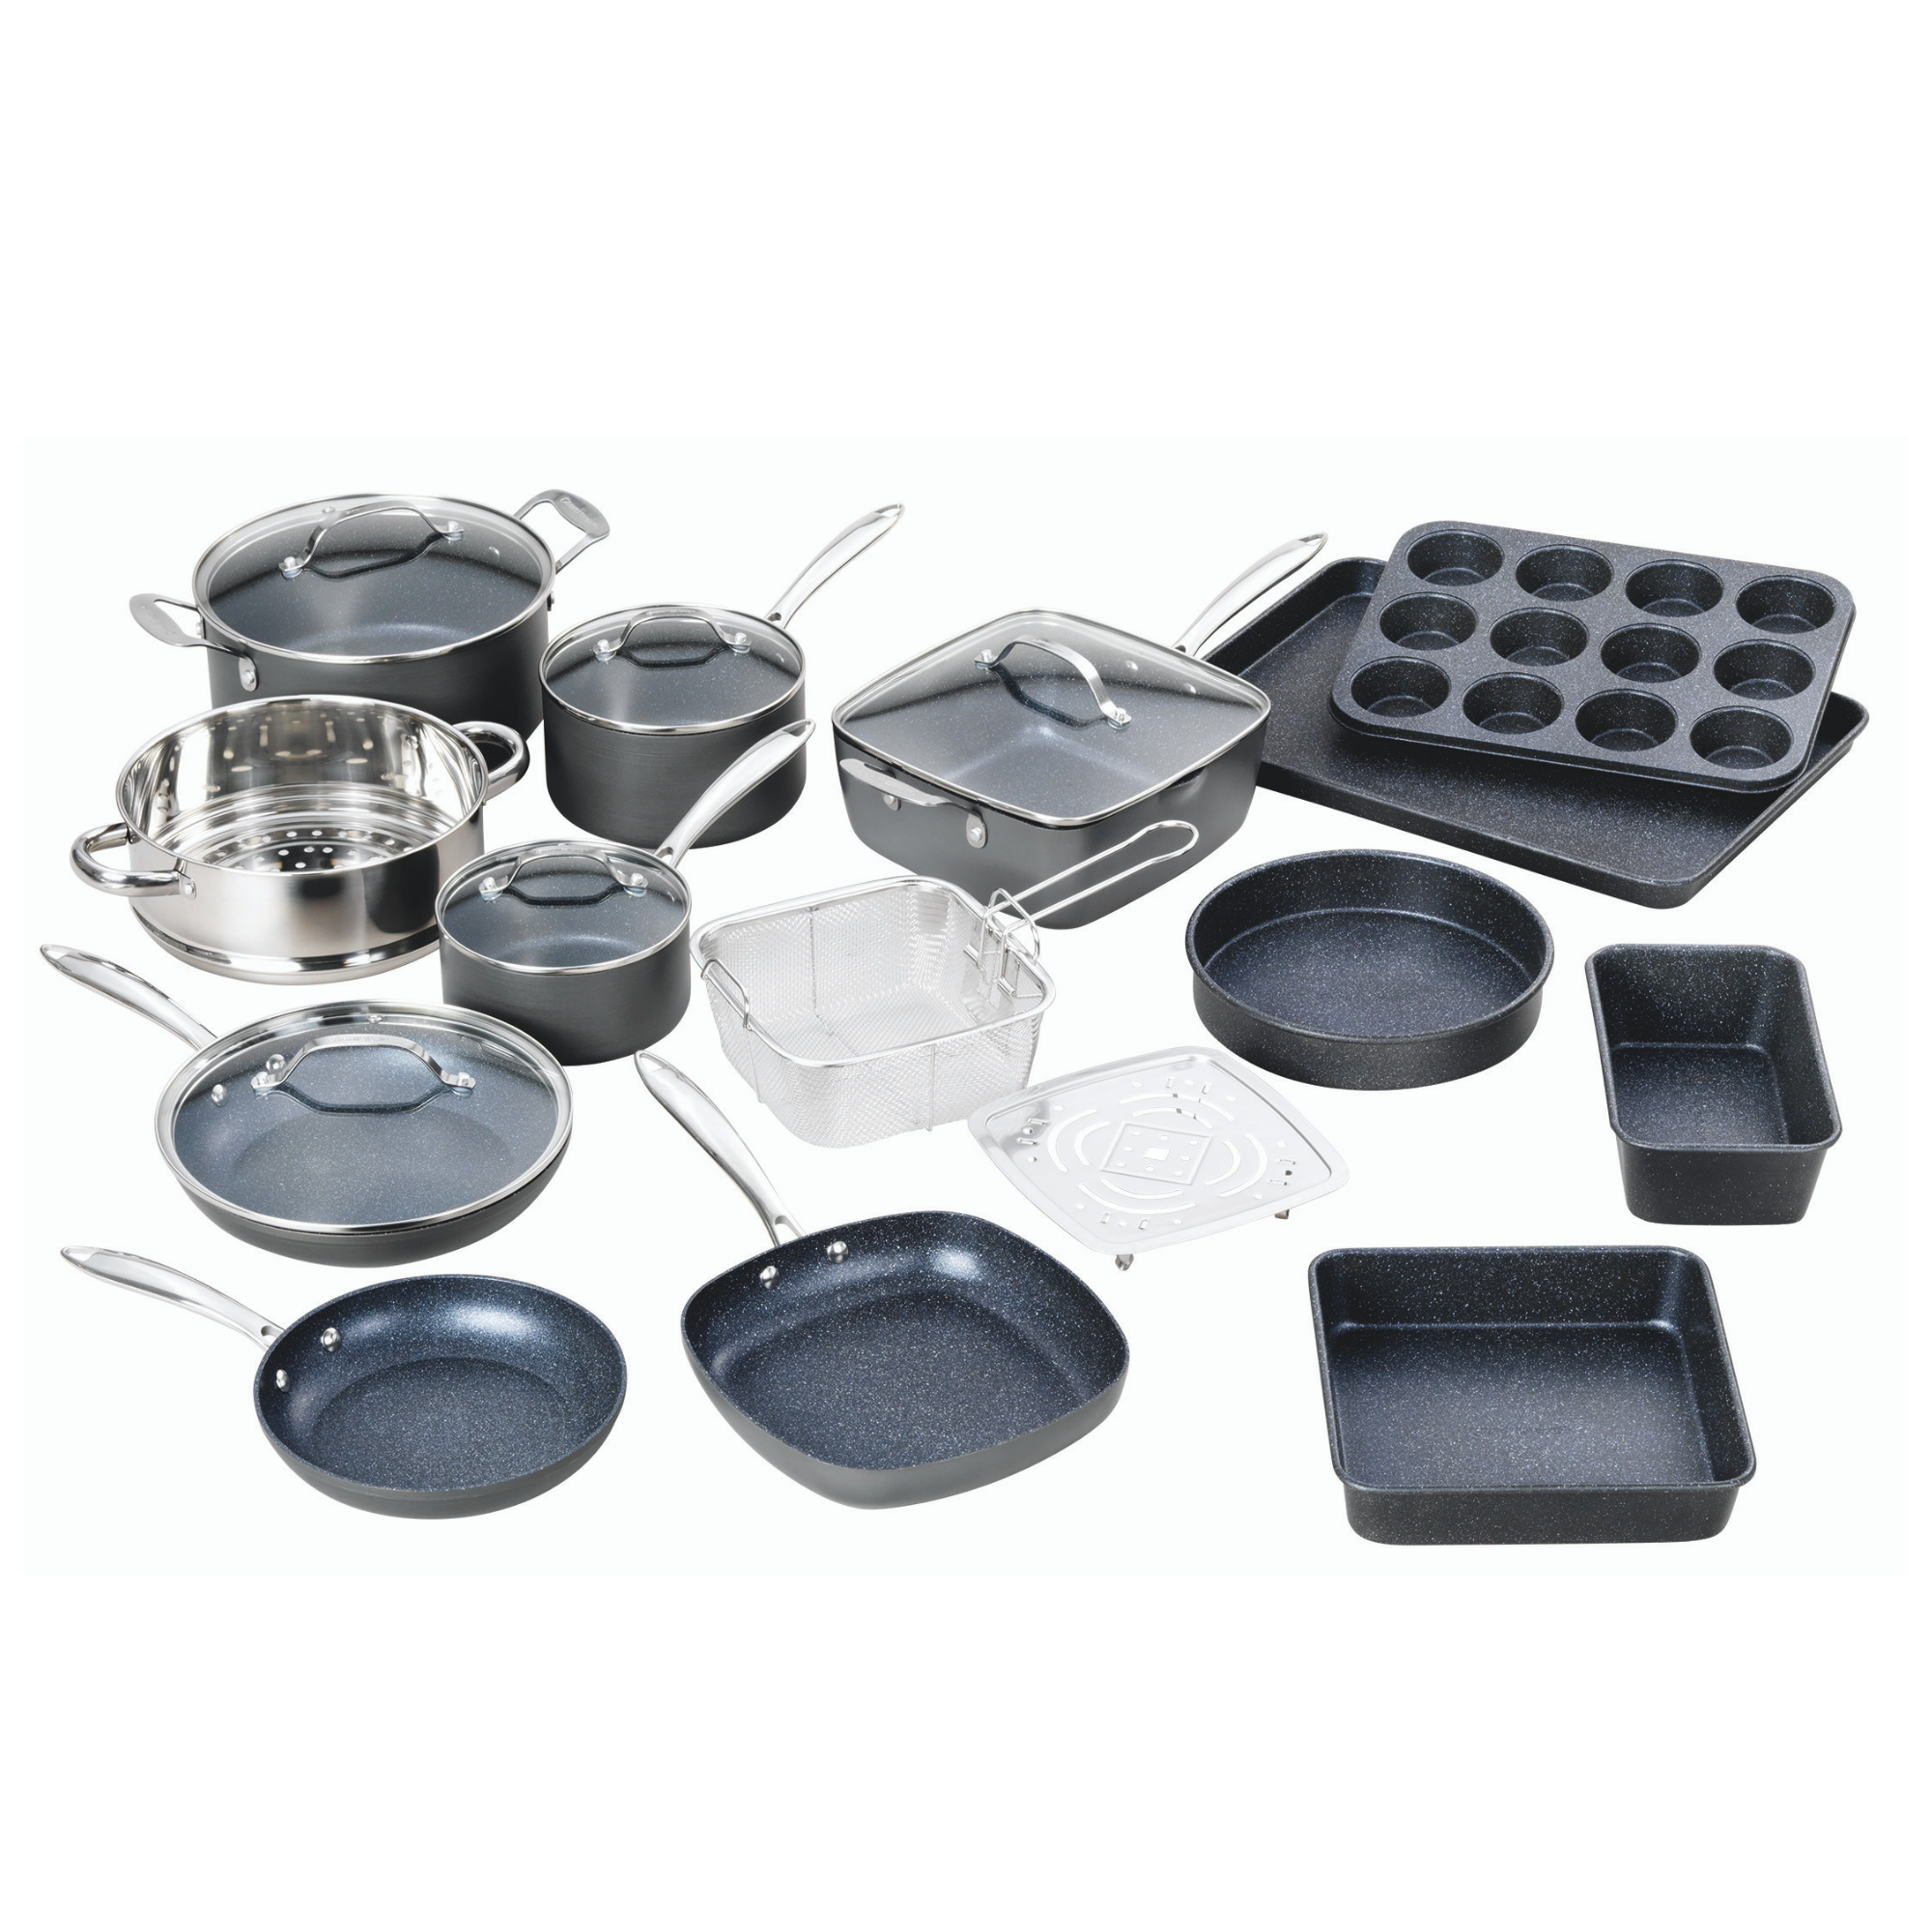 Granitestone Blue 20 Piece Nonstick Cookware and Bakeware Set